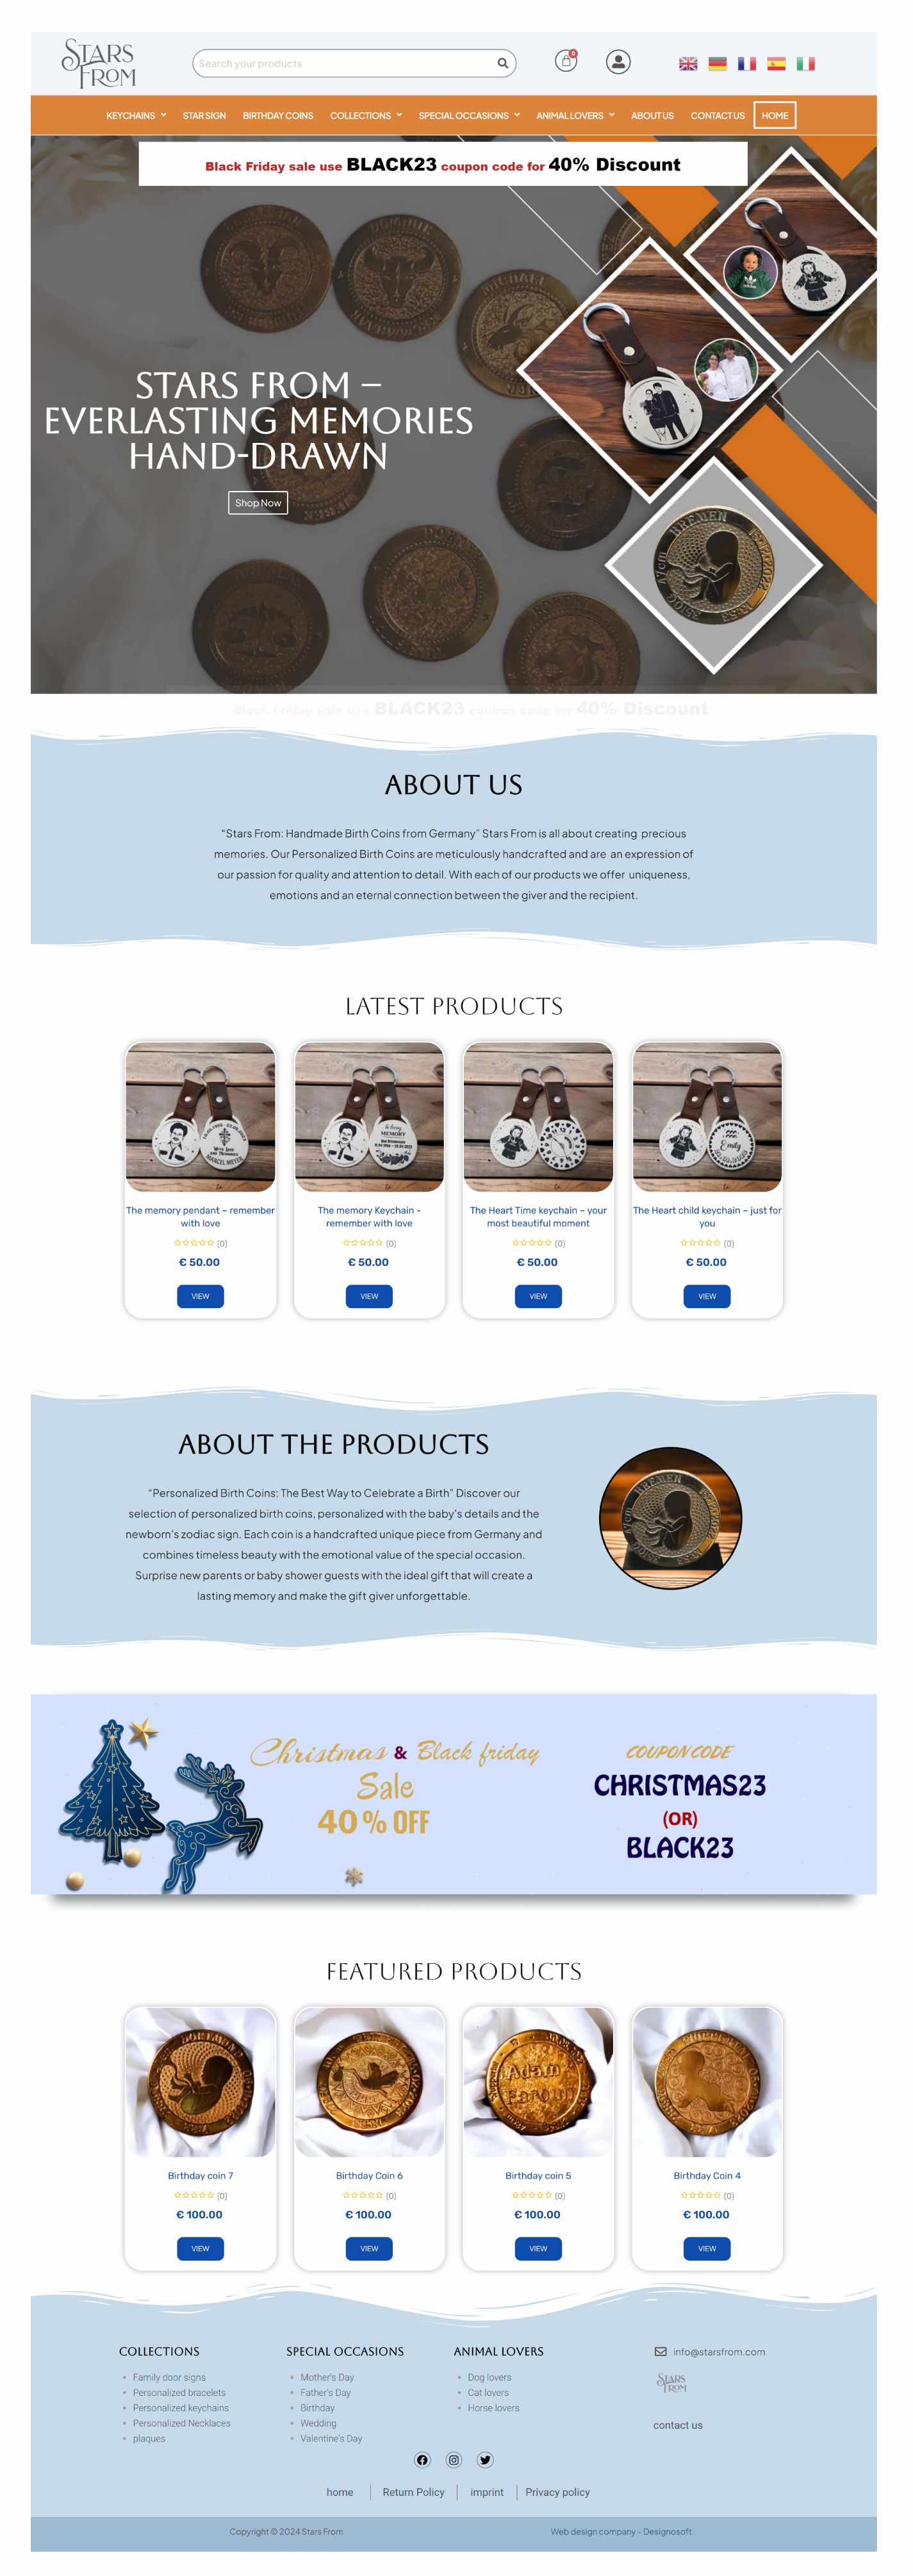 Shopping Cart website design in coimbatore